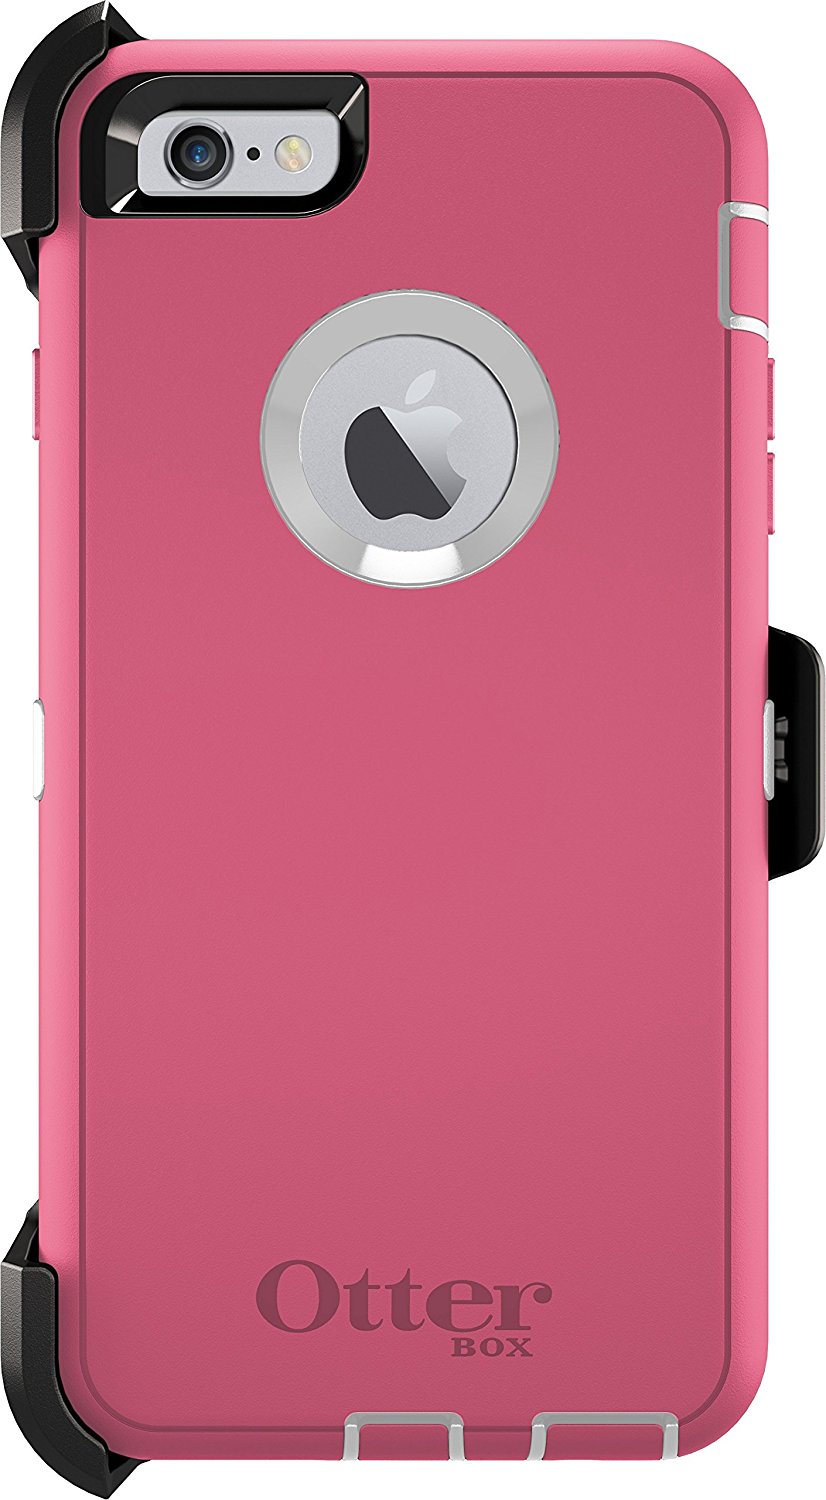 Otterbox Defender Series iPhone 6 Plus/6s Plus phone case White/Hibiscus Pink - image 2 of 3